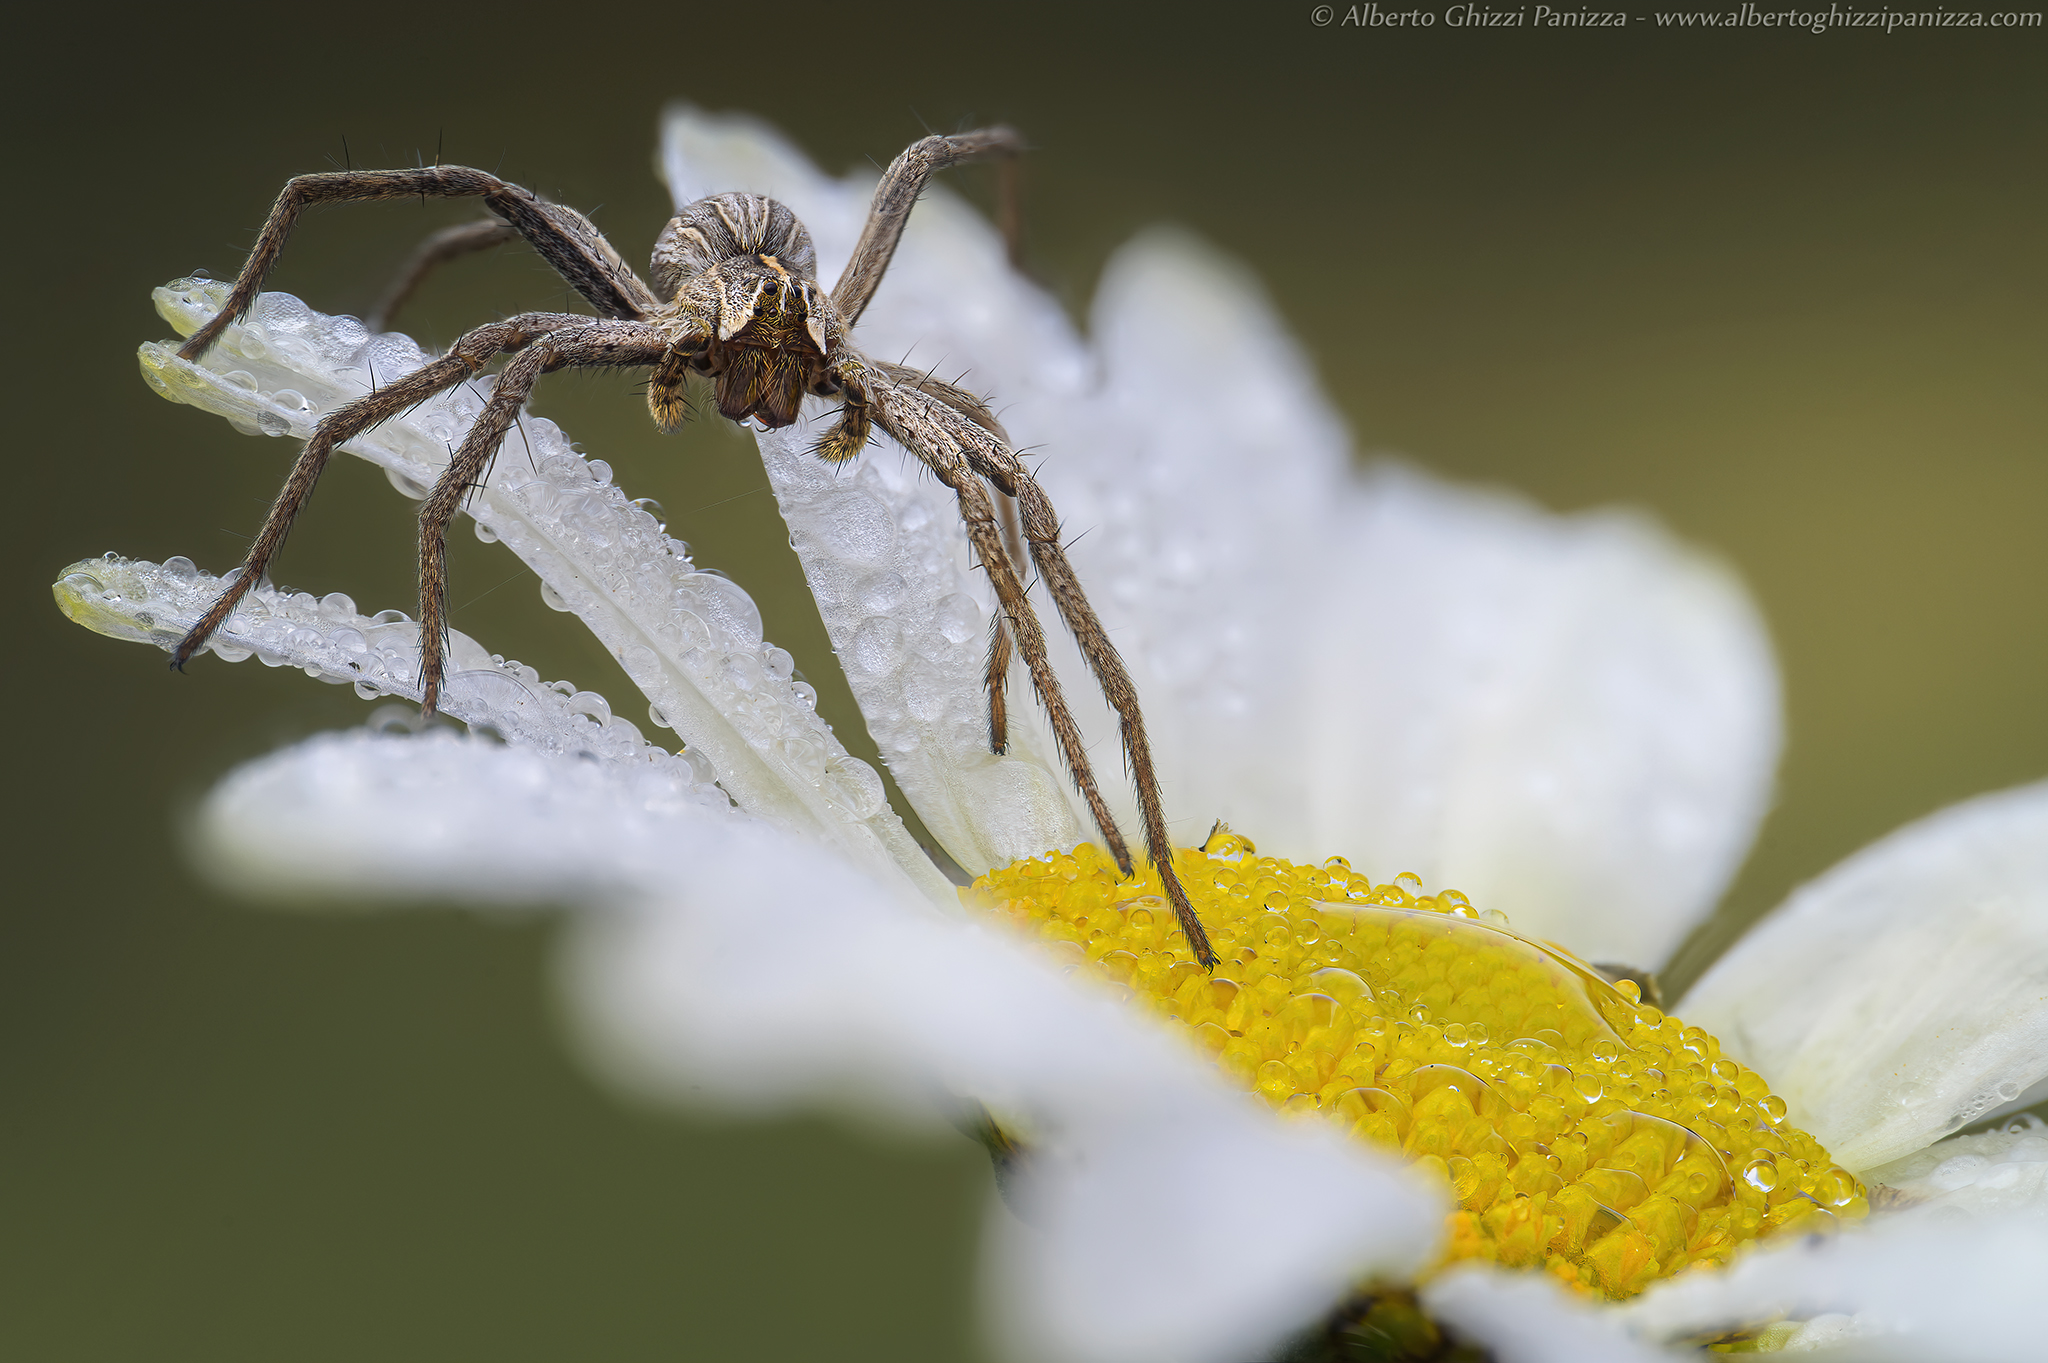 Spider on daisy...